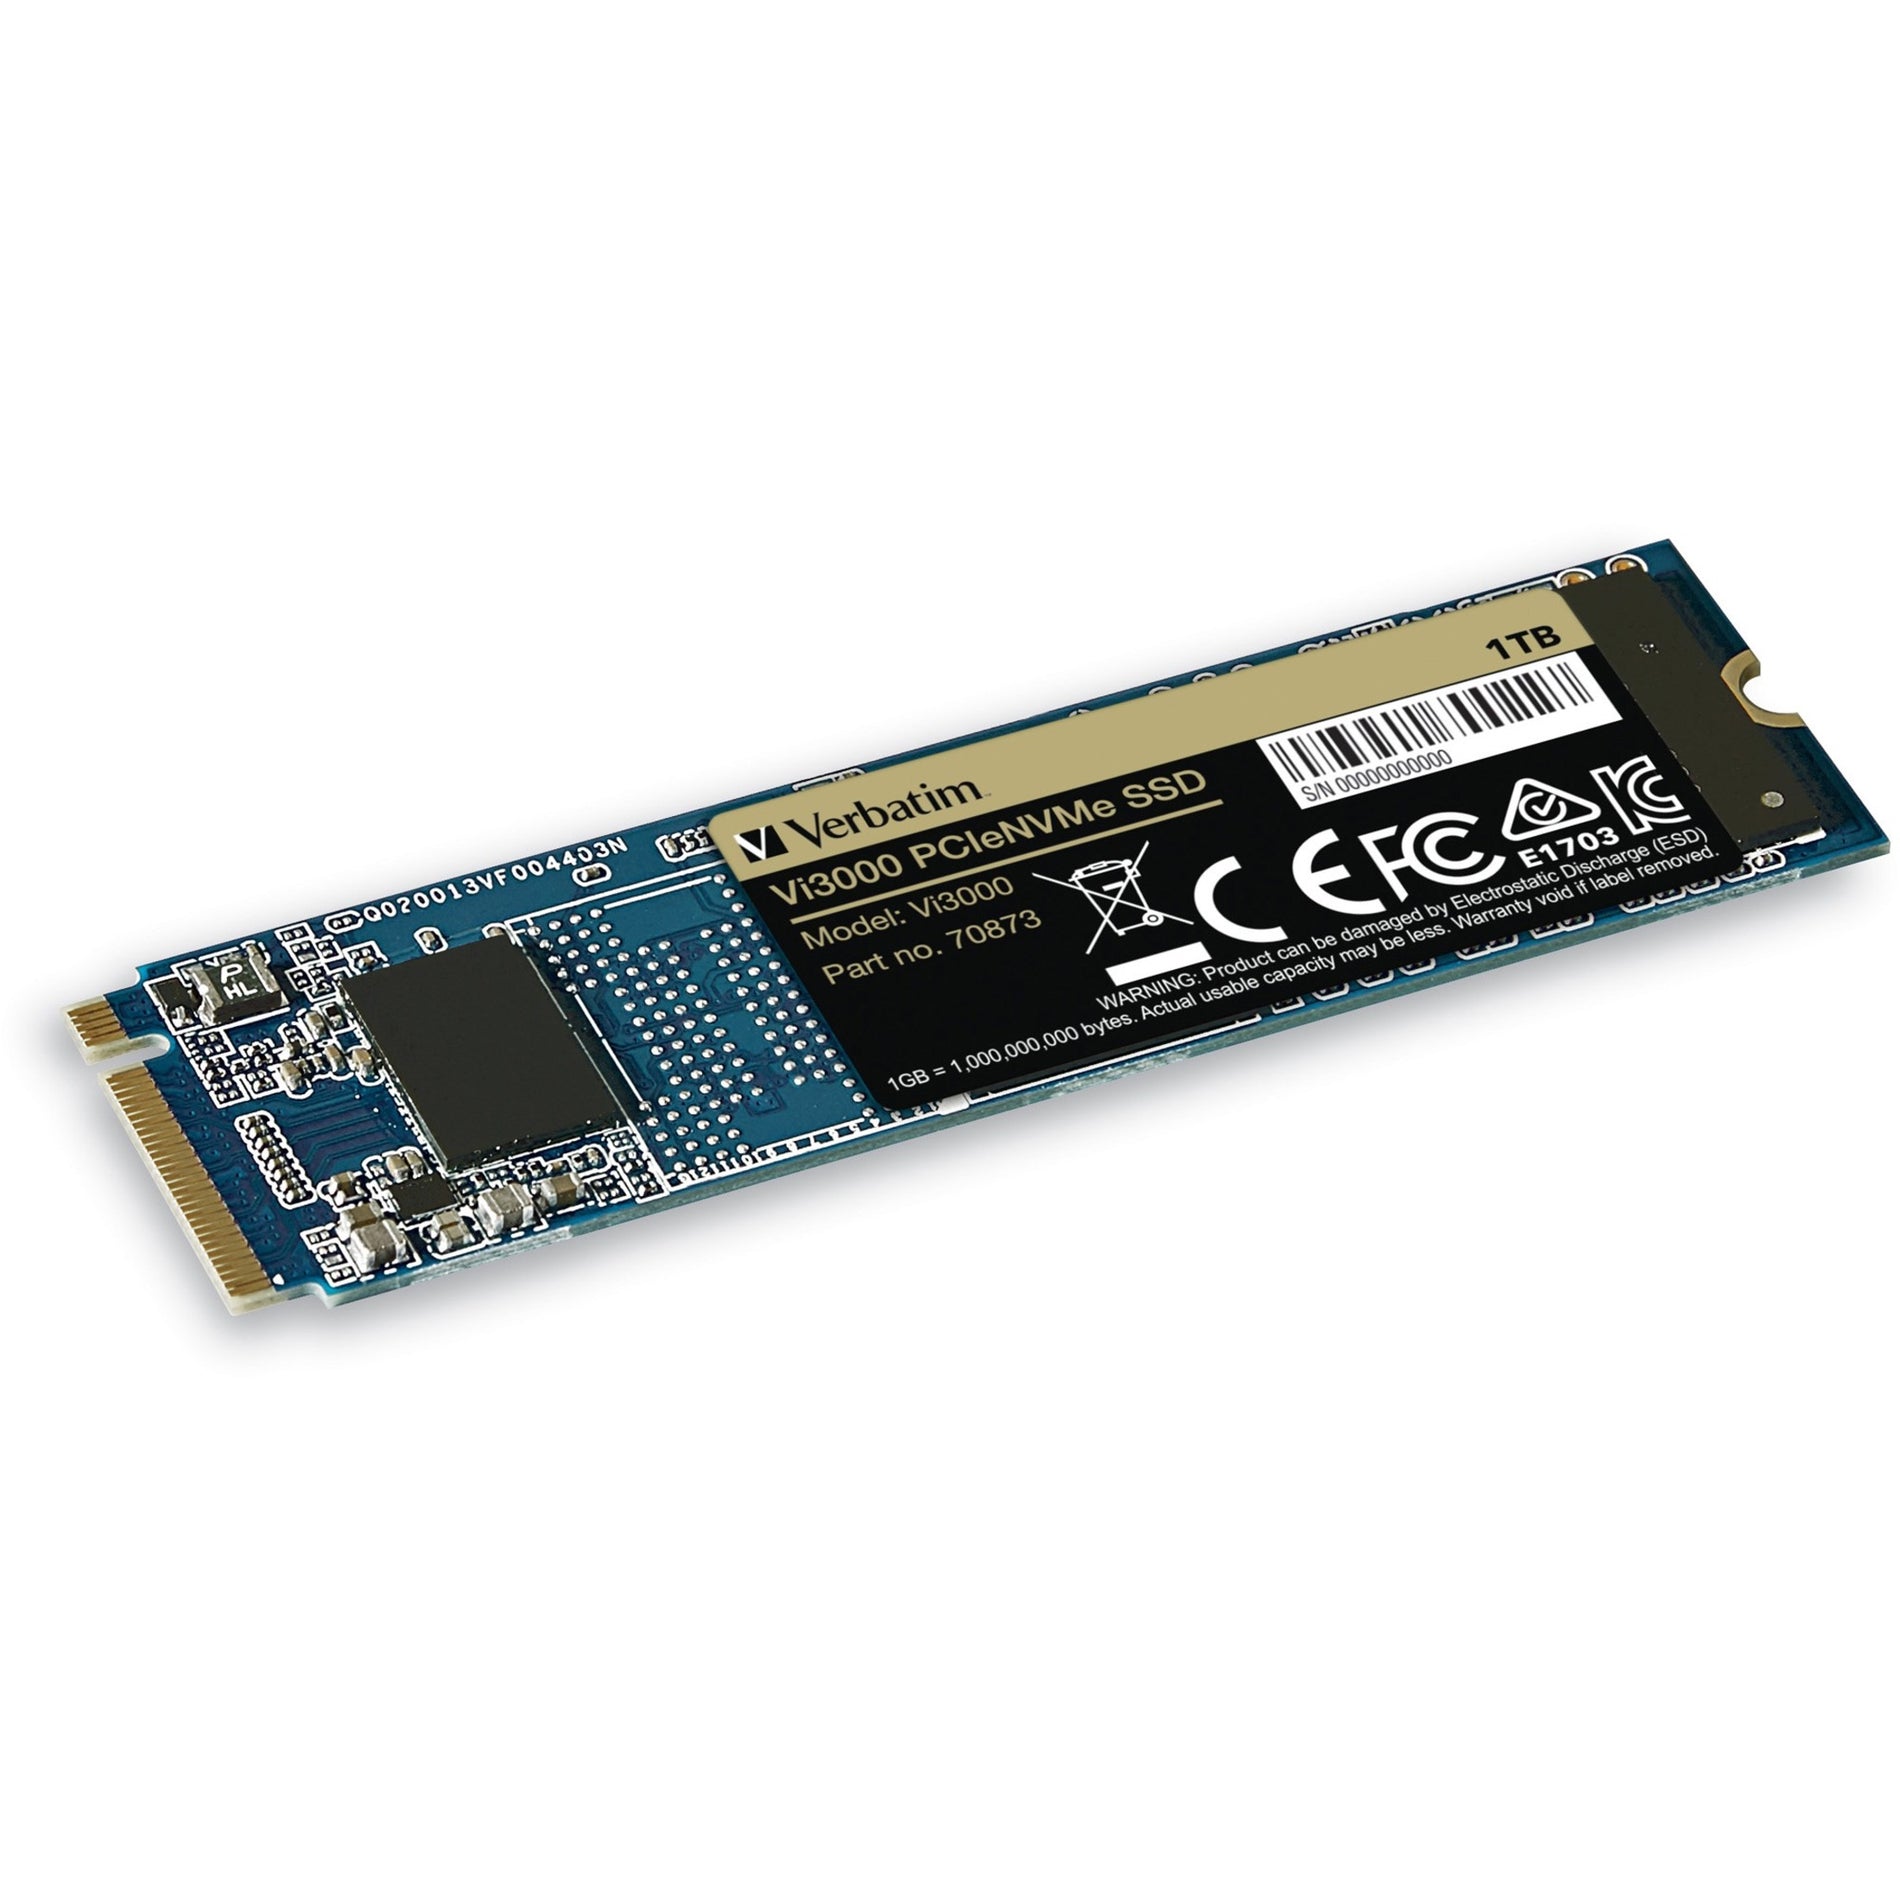 Verbatim 70873 1TB Vi3000 PCIe NVMe M.2 2280 Internal SSD, 5-Year Warranty, 3000 MB/s Read Speed